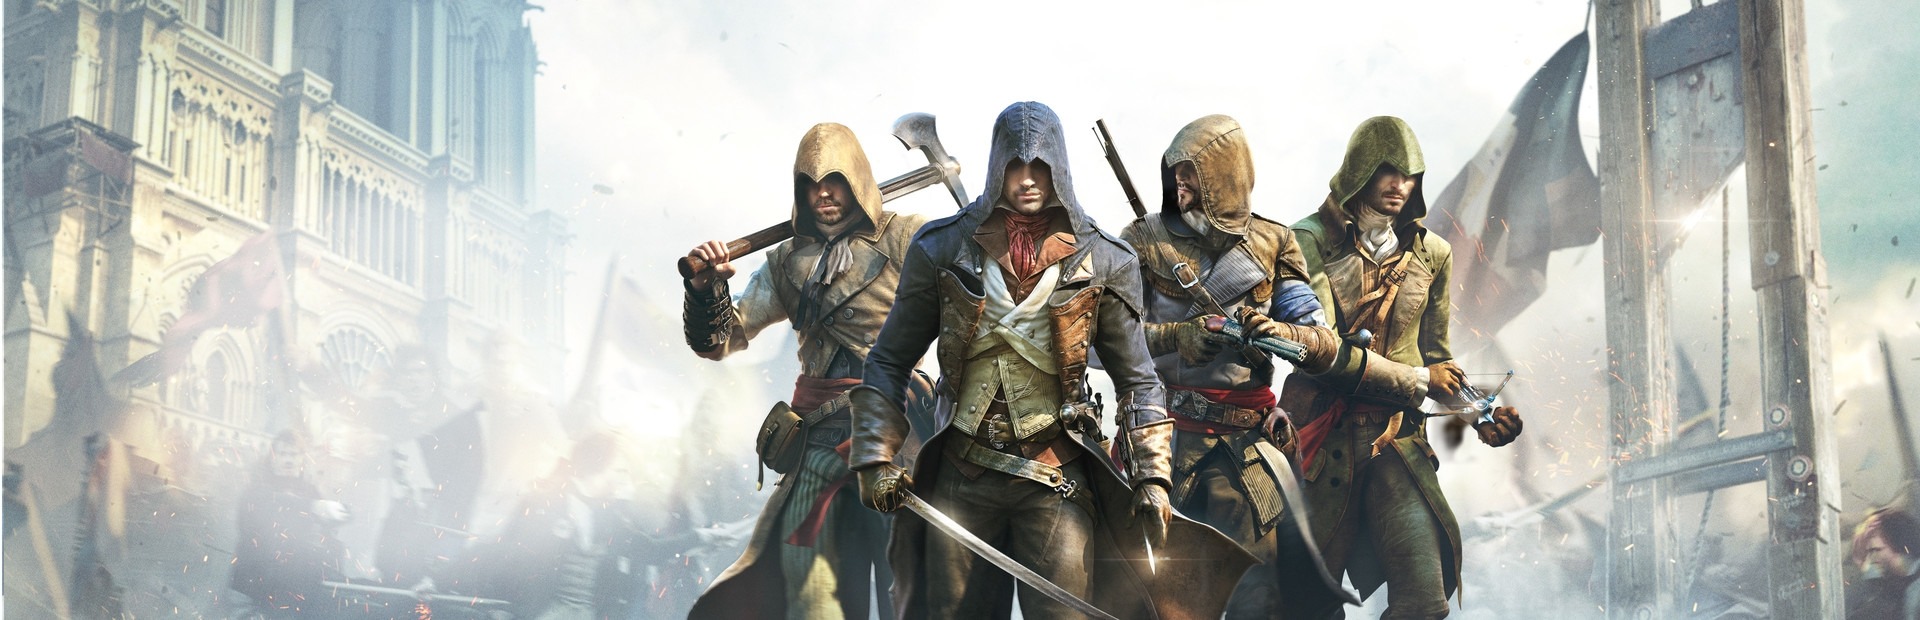 Assassin's Creed Unity Public Co-Op & Stealth Kills - Ultra Settings (4K  60FPS) 